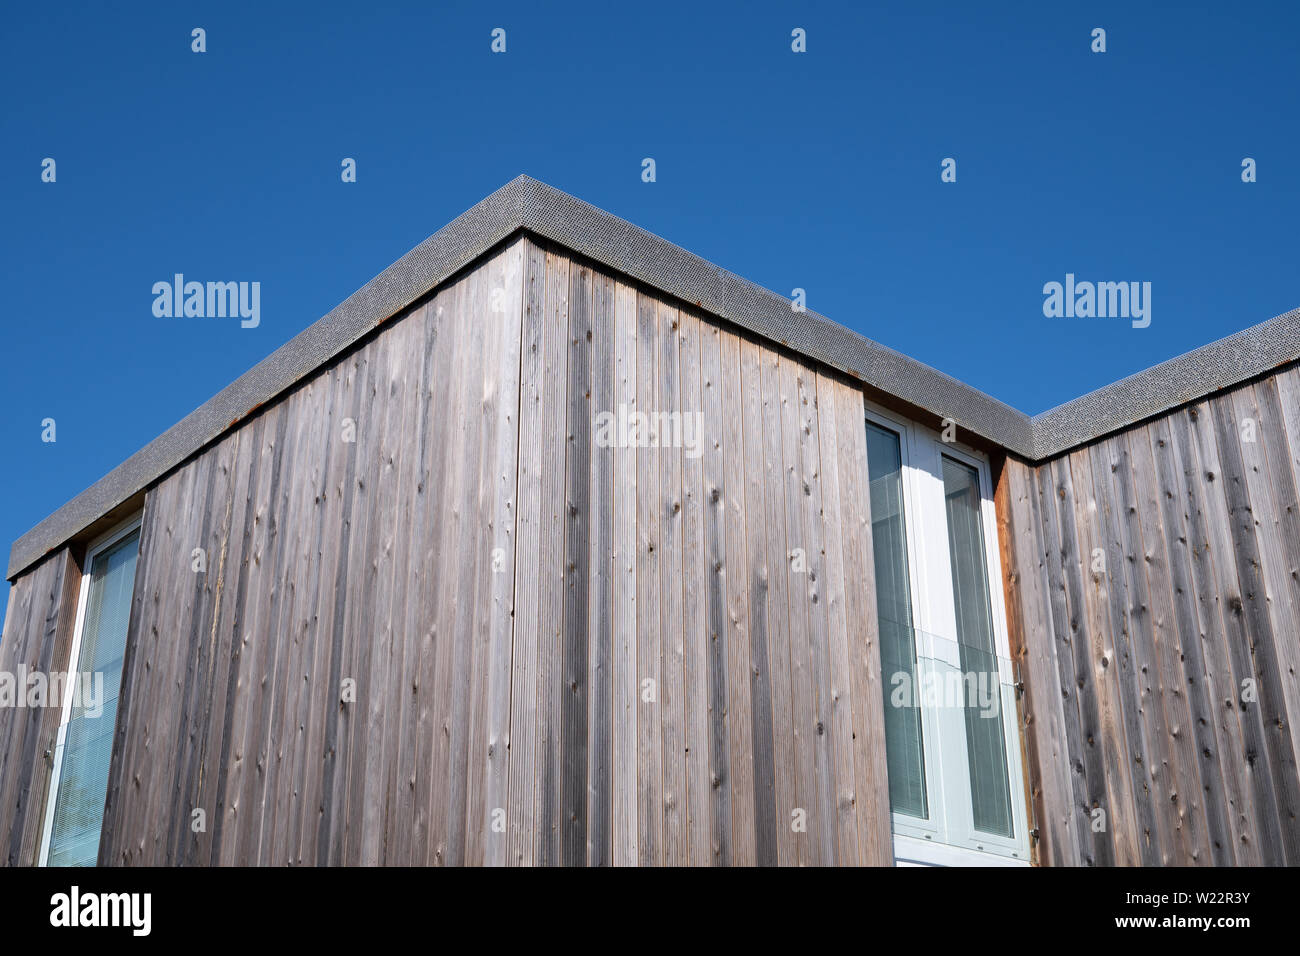 modern vertical wood siding